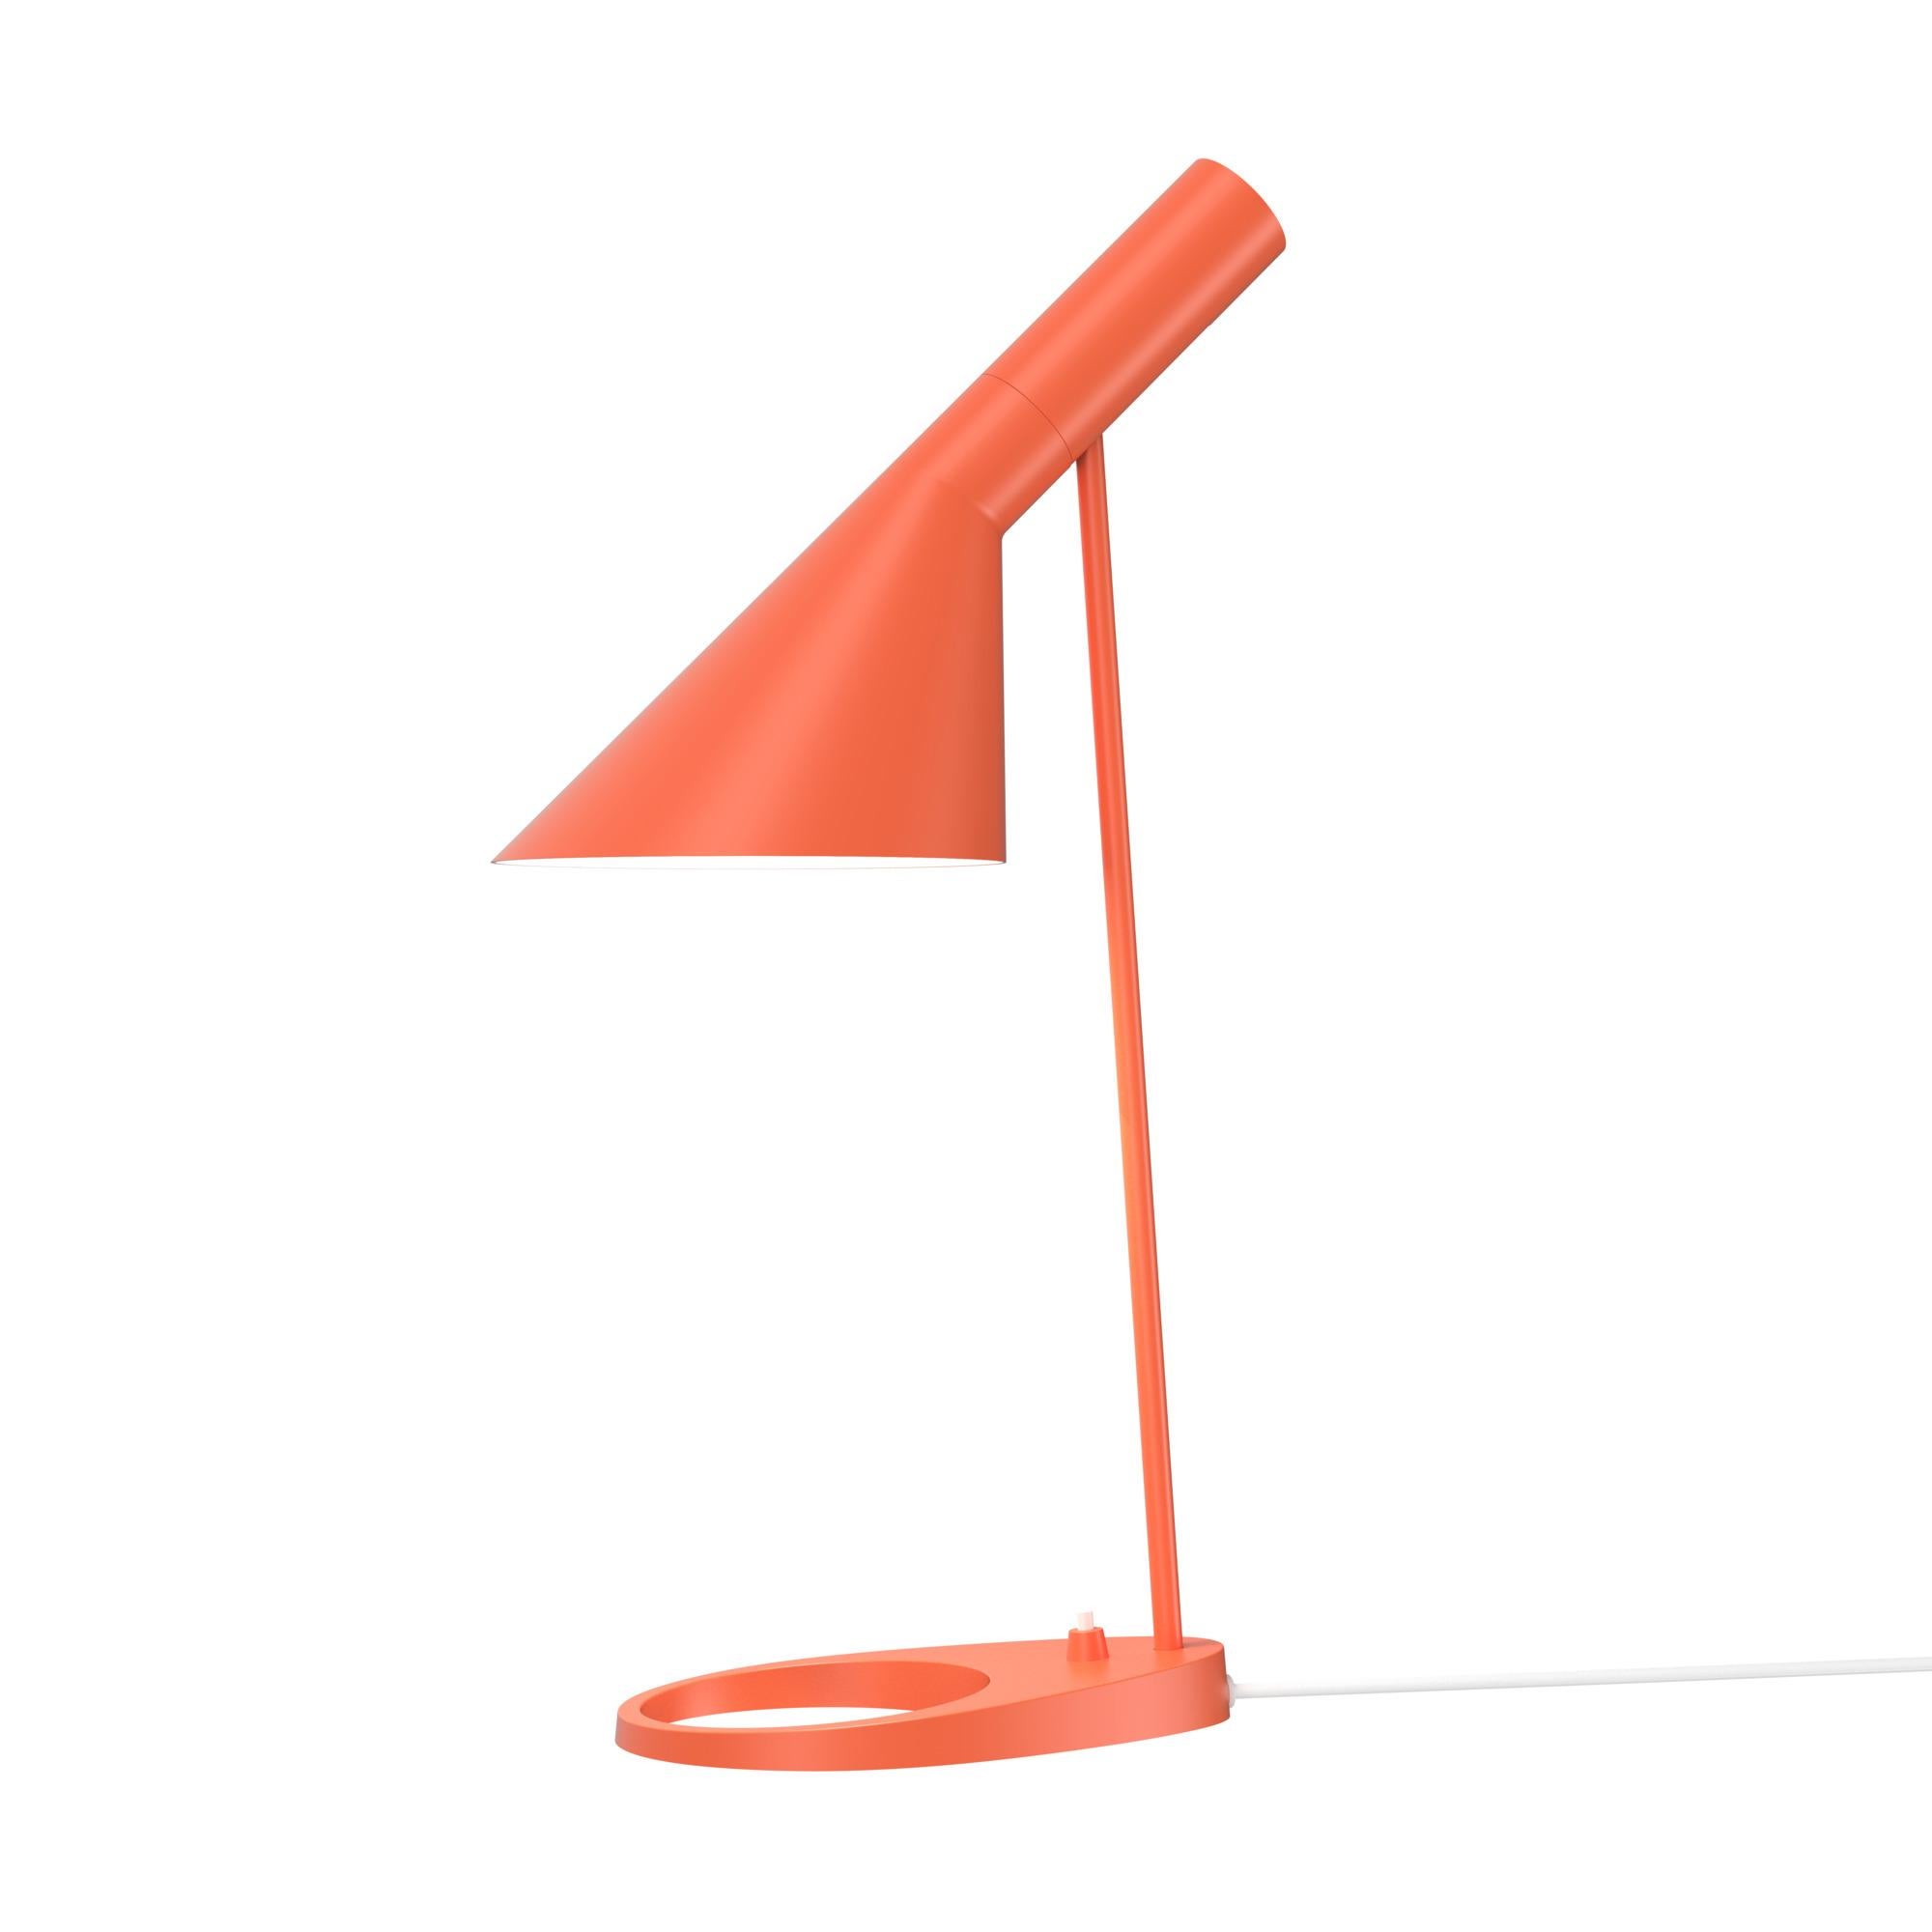 Arne Jacobsen AJ Table Lamp in Warm Sand for Louis Poulsen For Sale 3